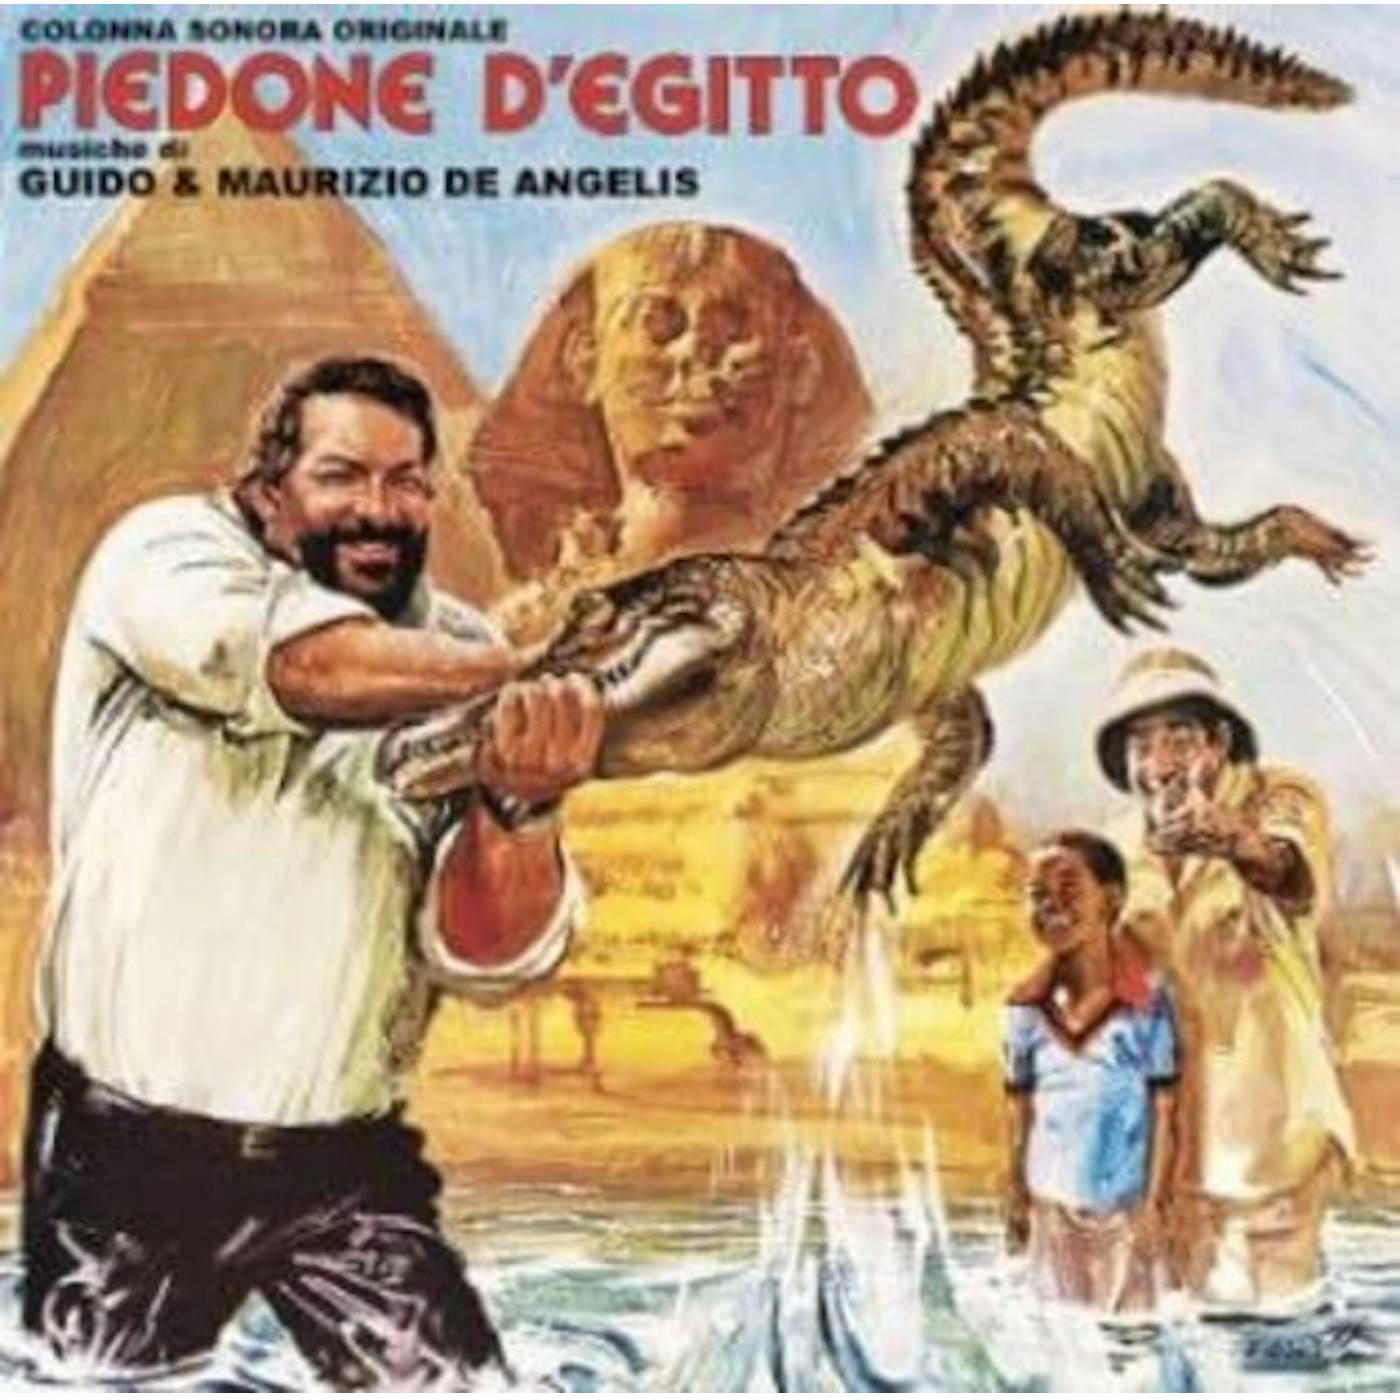 Guido & Maurizio De Angelis PIEDONE D'EGITTO - Original Soundtrack Vinyl Record